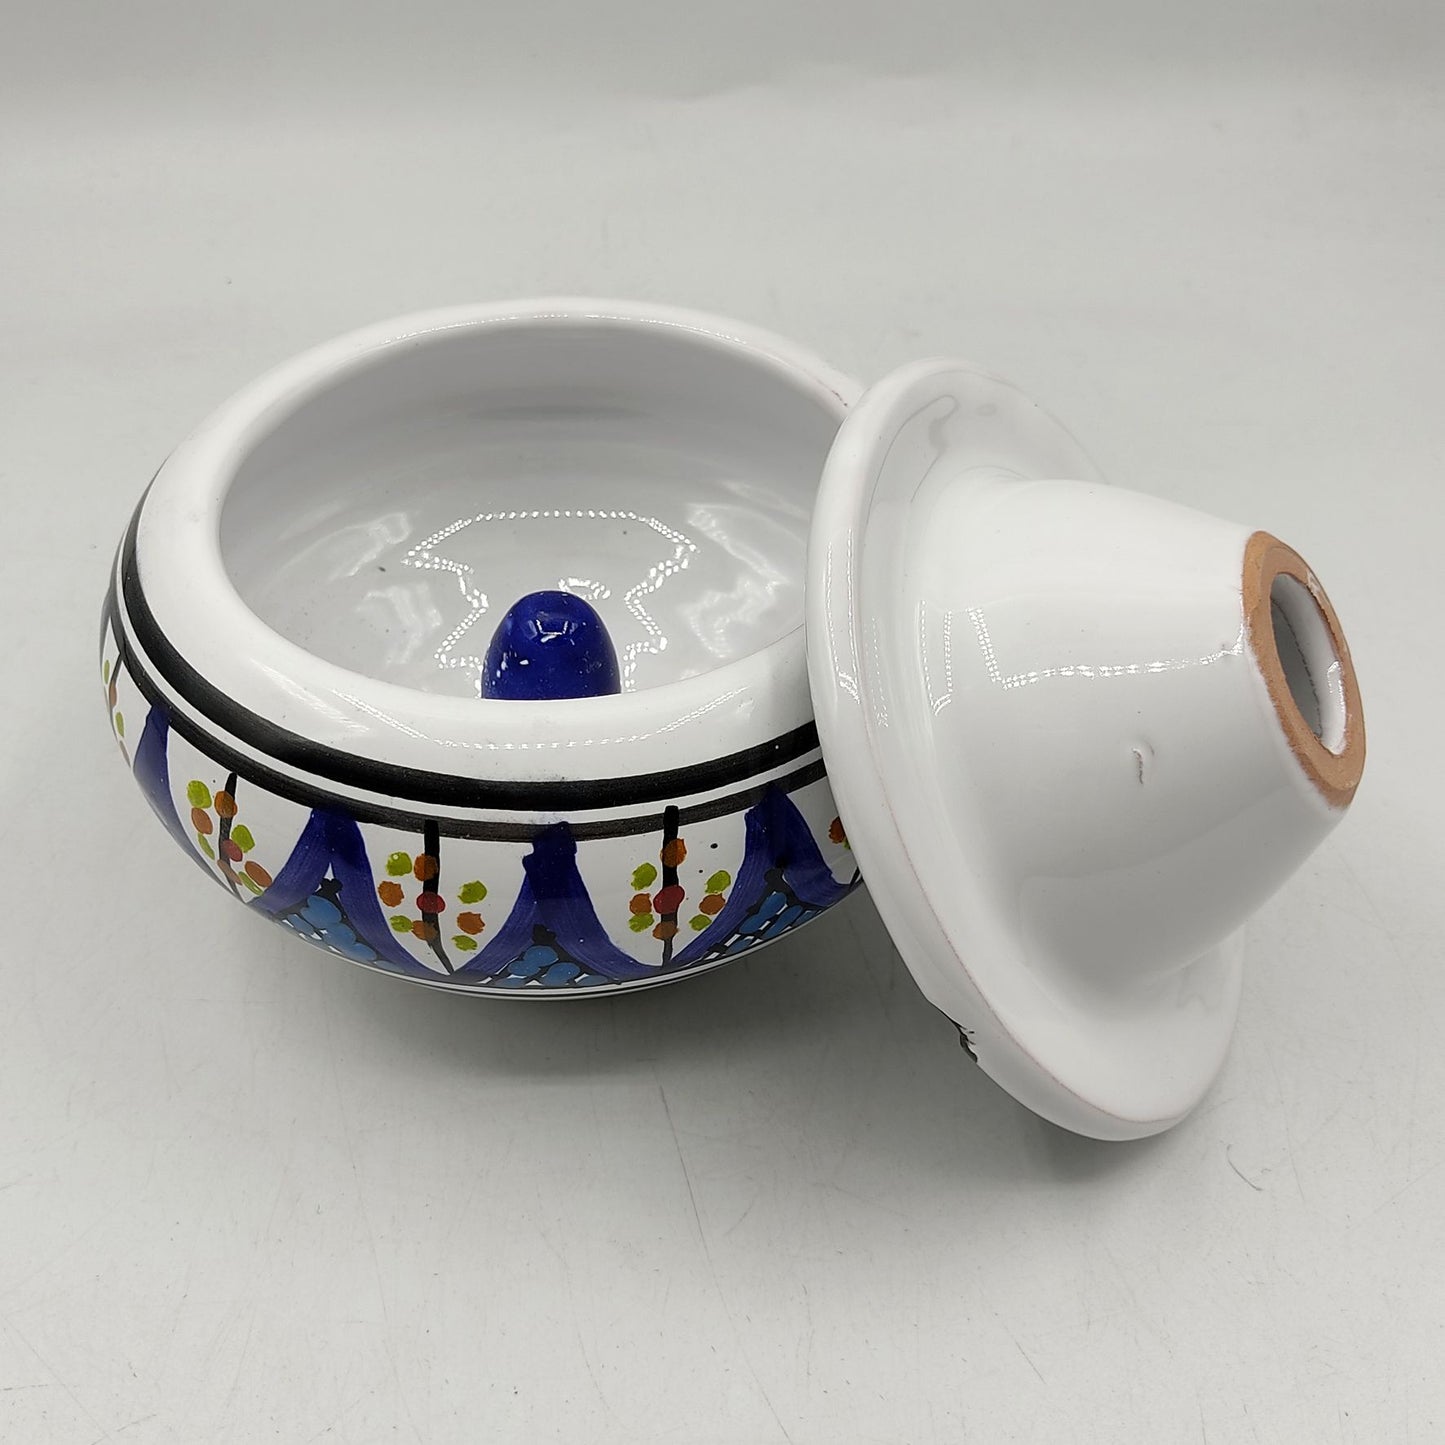 Etnico Arredo Posacenere Ceramica Antiodore Tunisina Marocchina 2007211200